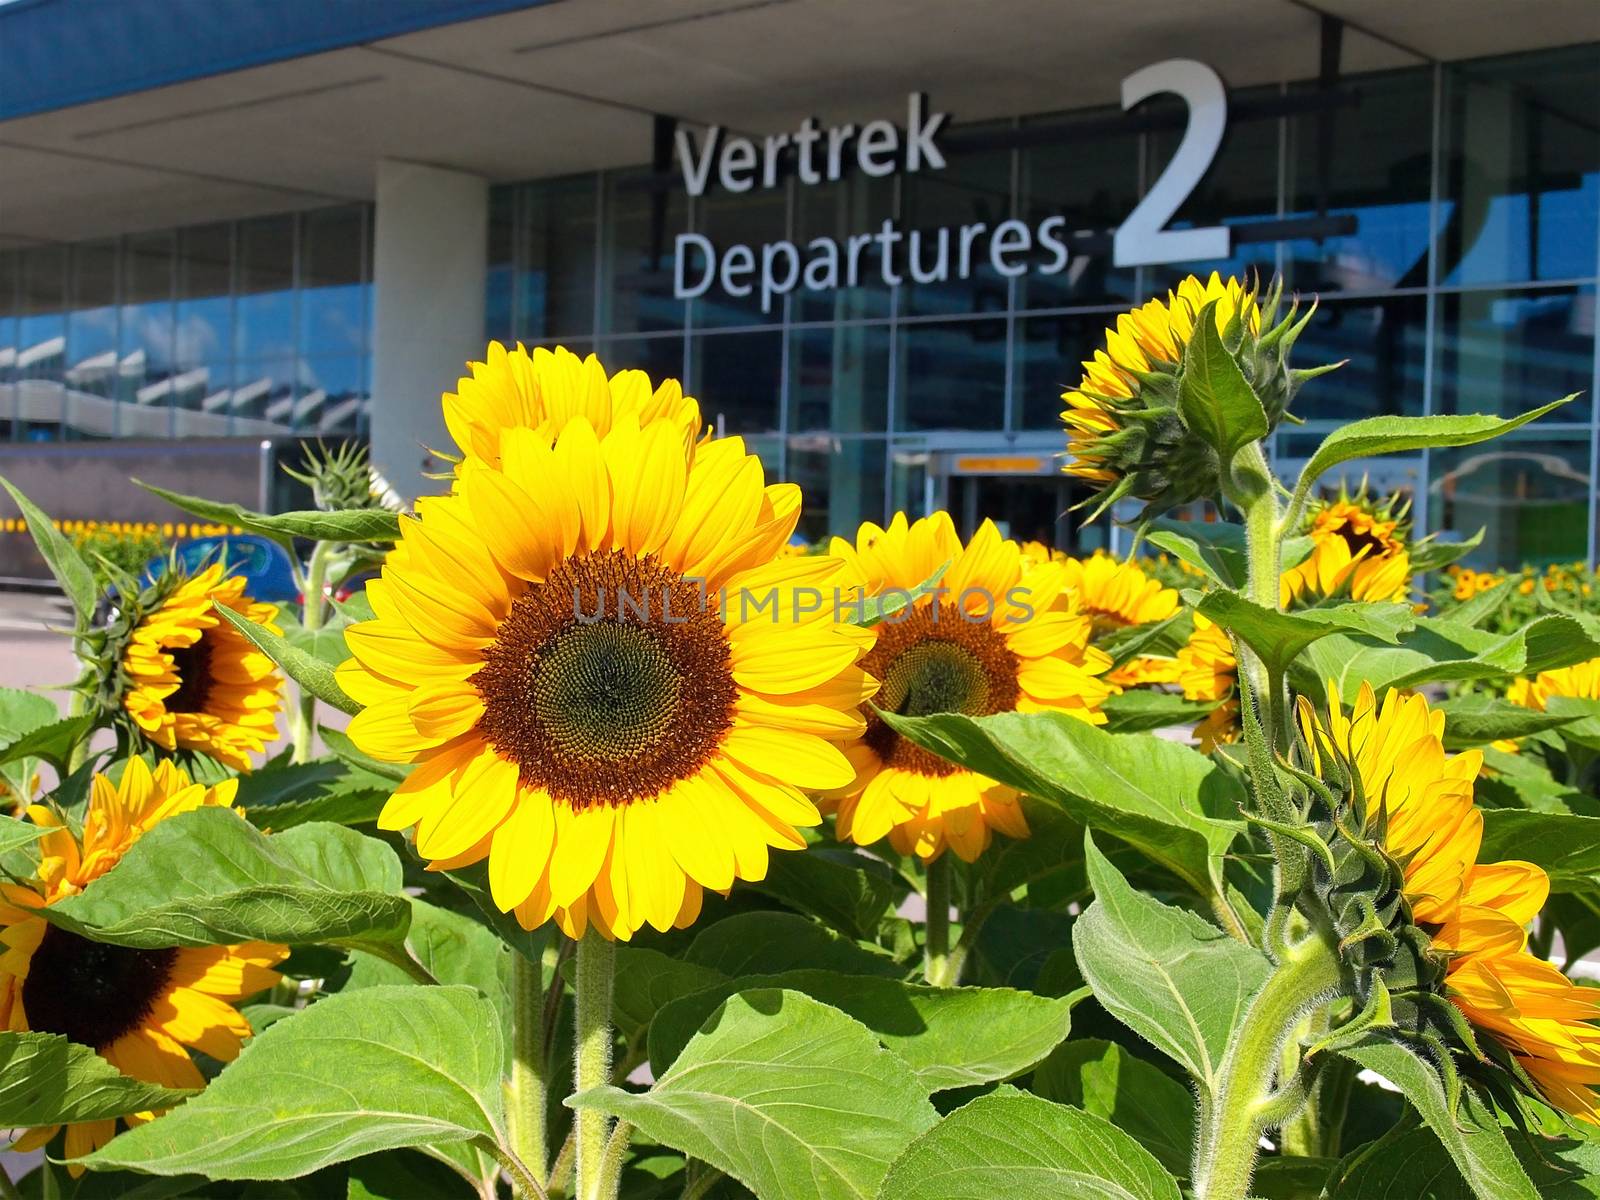 Sunflower Schiphol Airport by Venakr